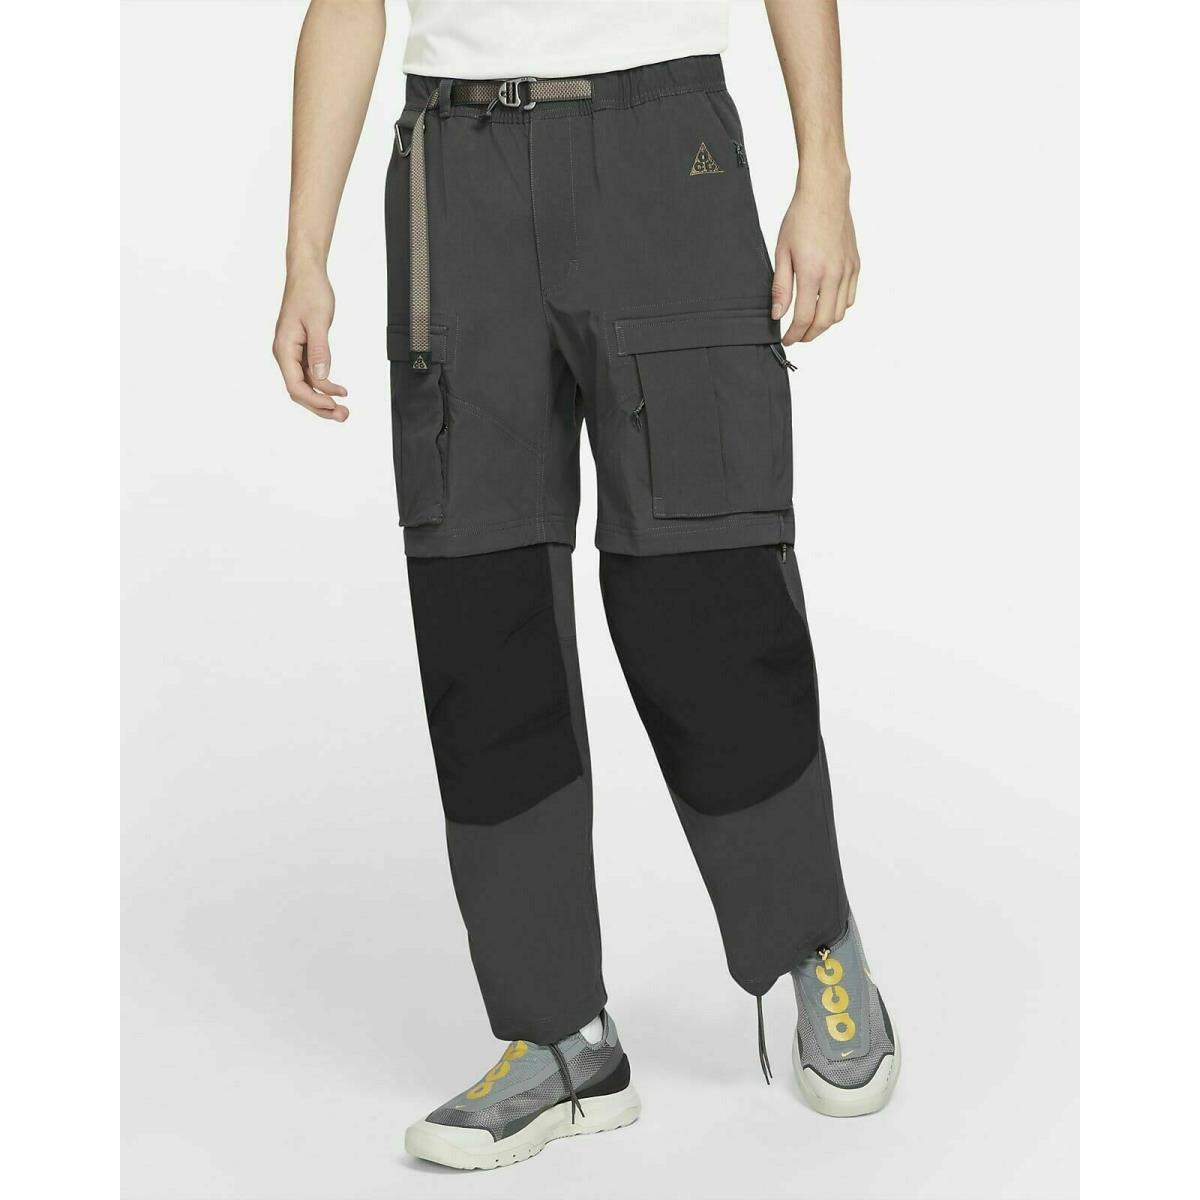 Nike Acg Convertible Smith Summit Smoke Grey Cargo Pants CV0655-070 Men s XL